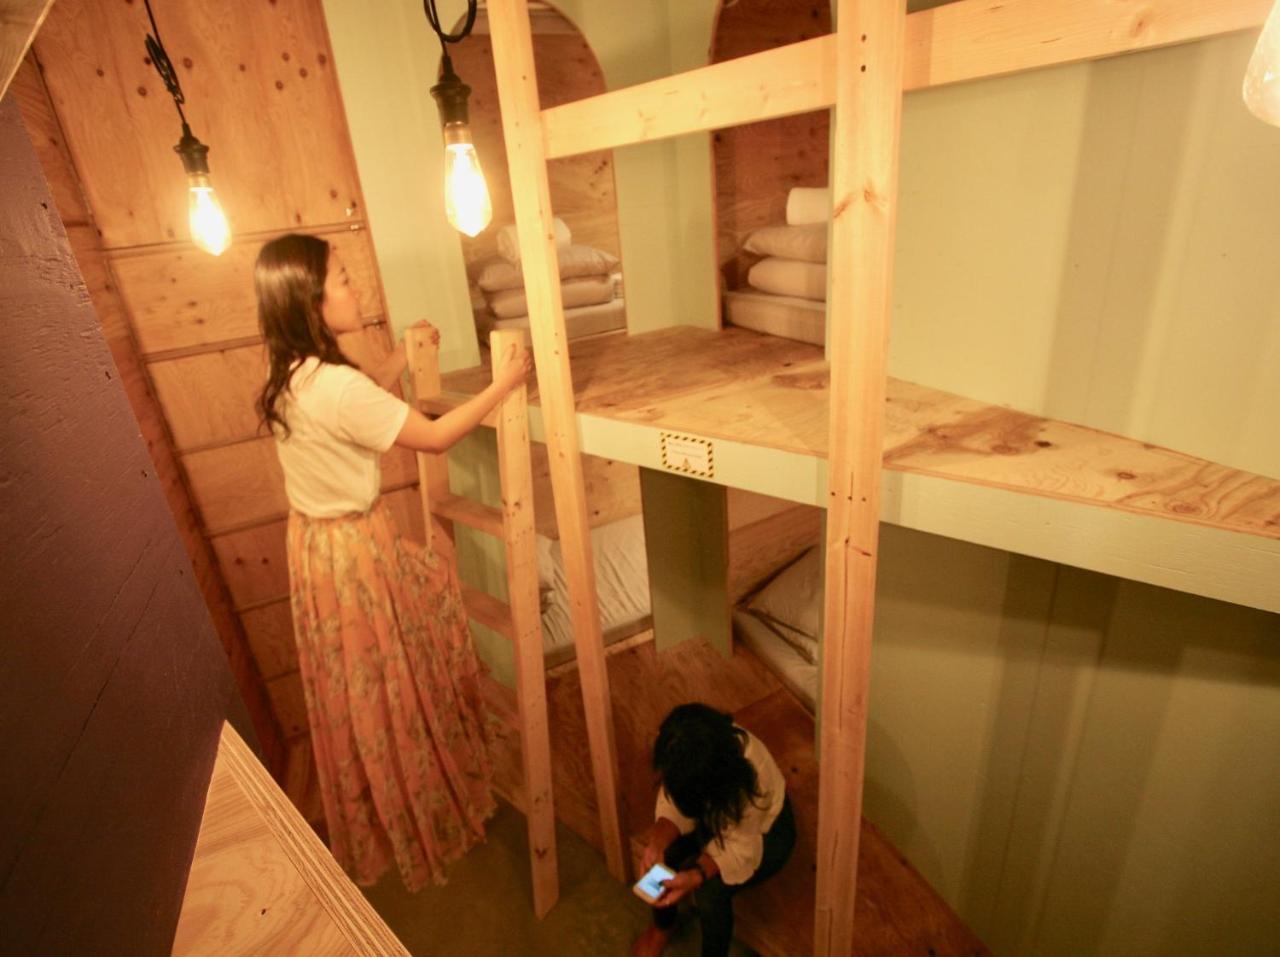 Ishigaki Guesthouse Hive Exterior foto